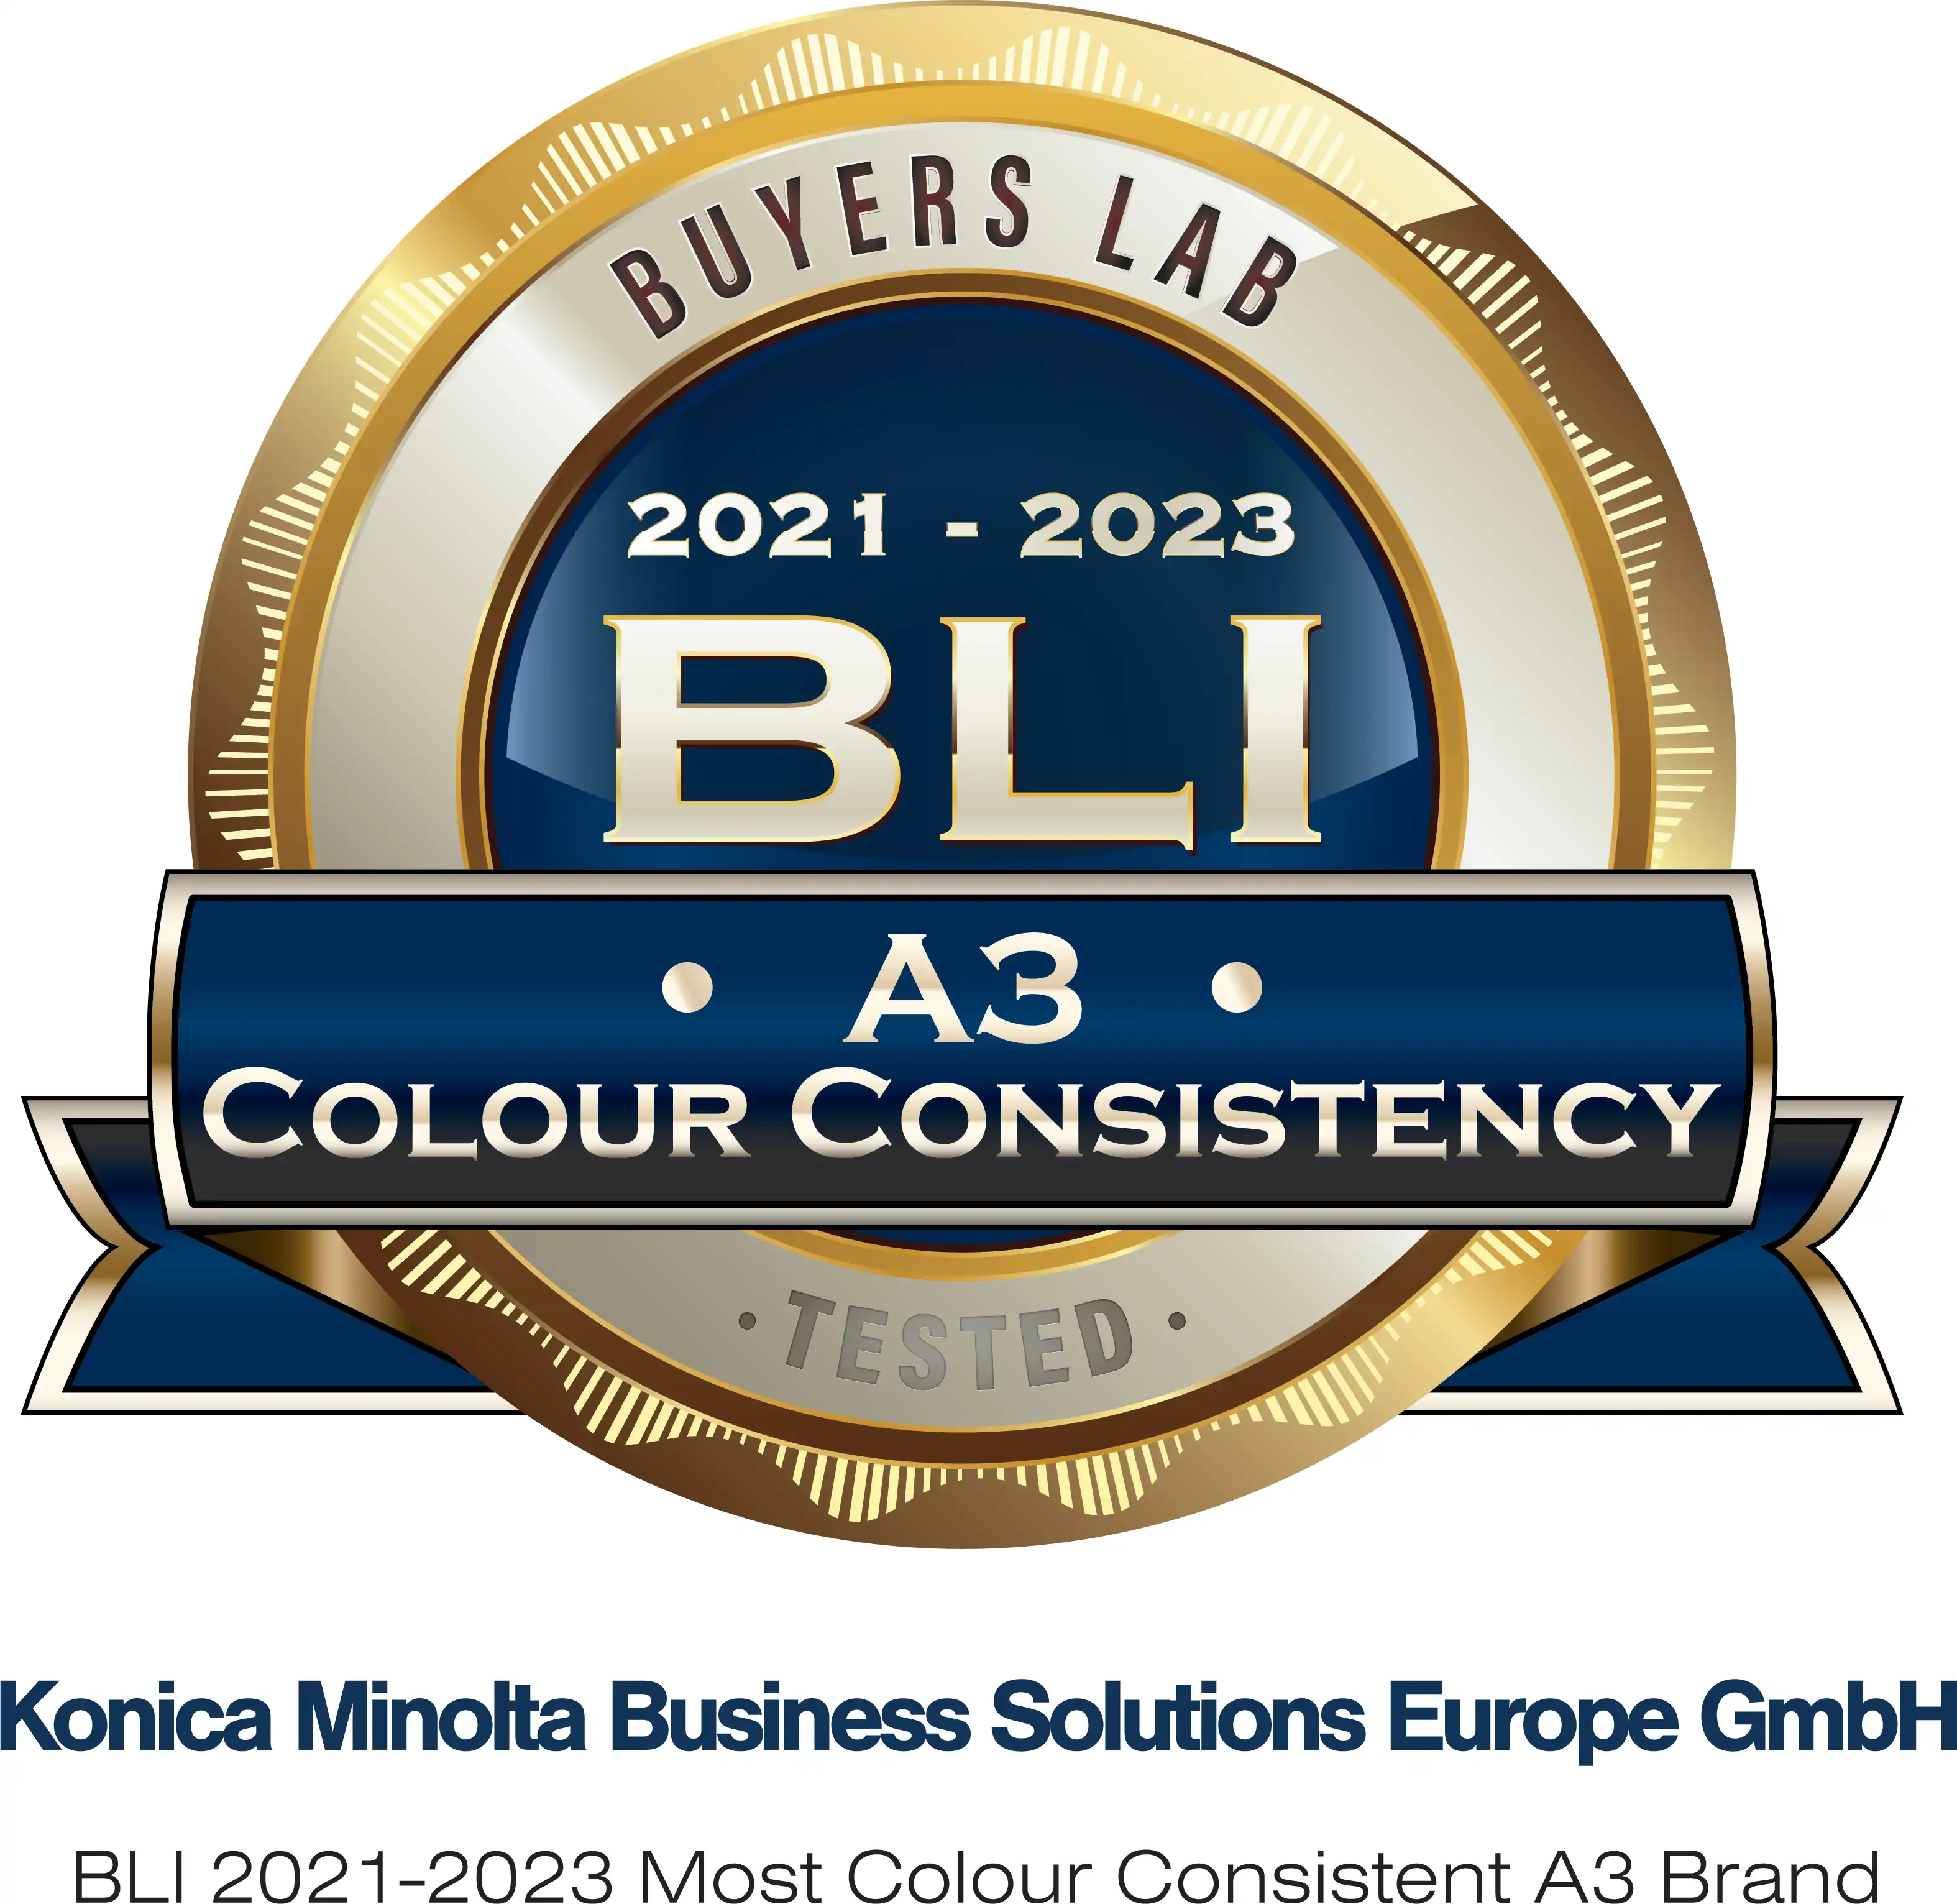 BLI 2021-2023 Most Colour Consistent A3 Brand Award 